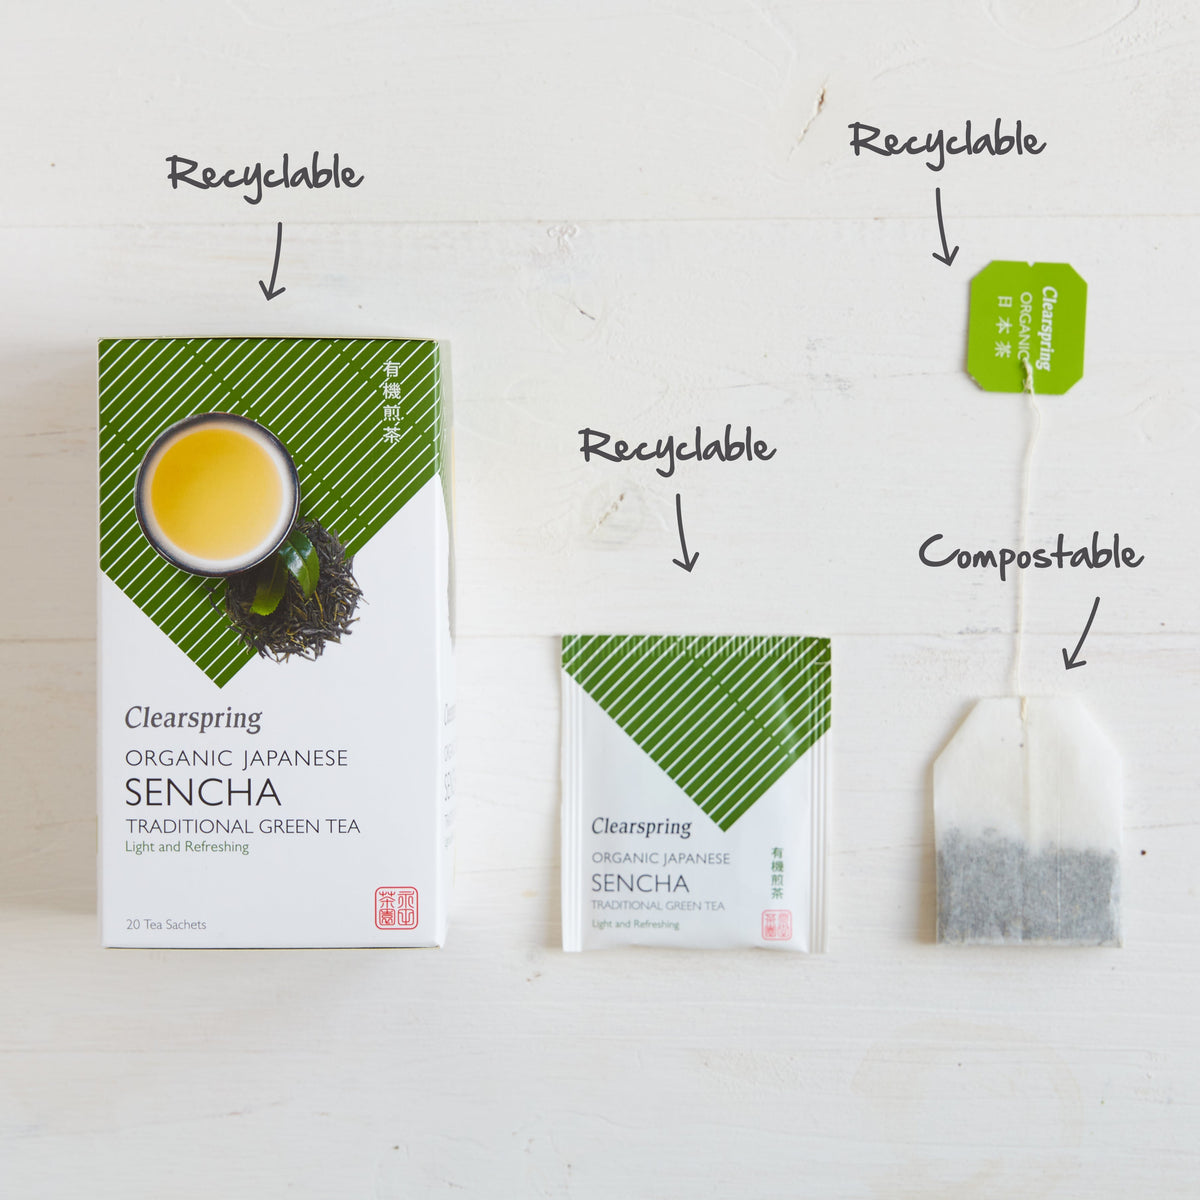 Clearspring Organic Japanese Sencha Green Tea - 20 Tea Sachets (4 Pack)